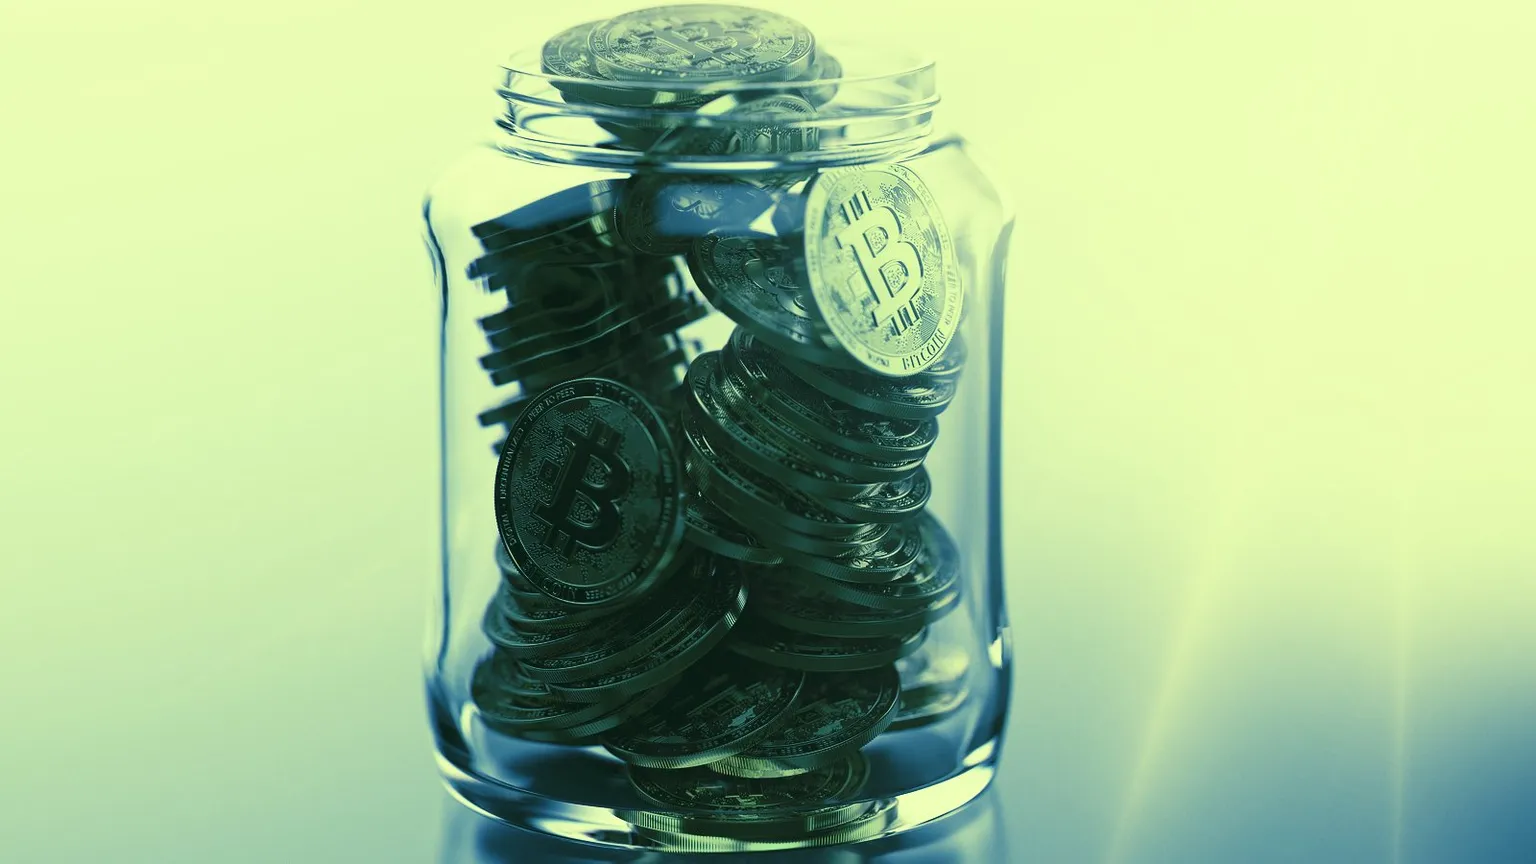 Ahorros en Bitcoin. Imagen: Shutterstock